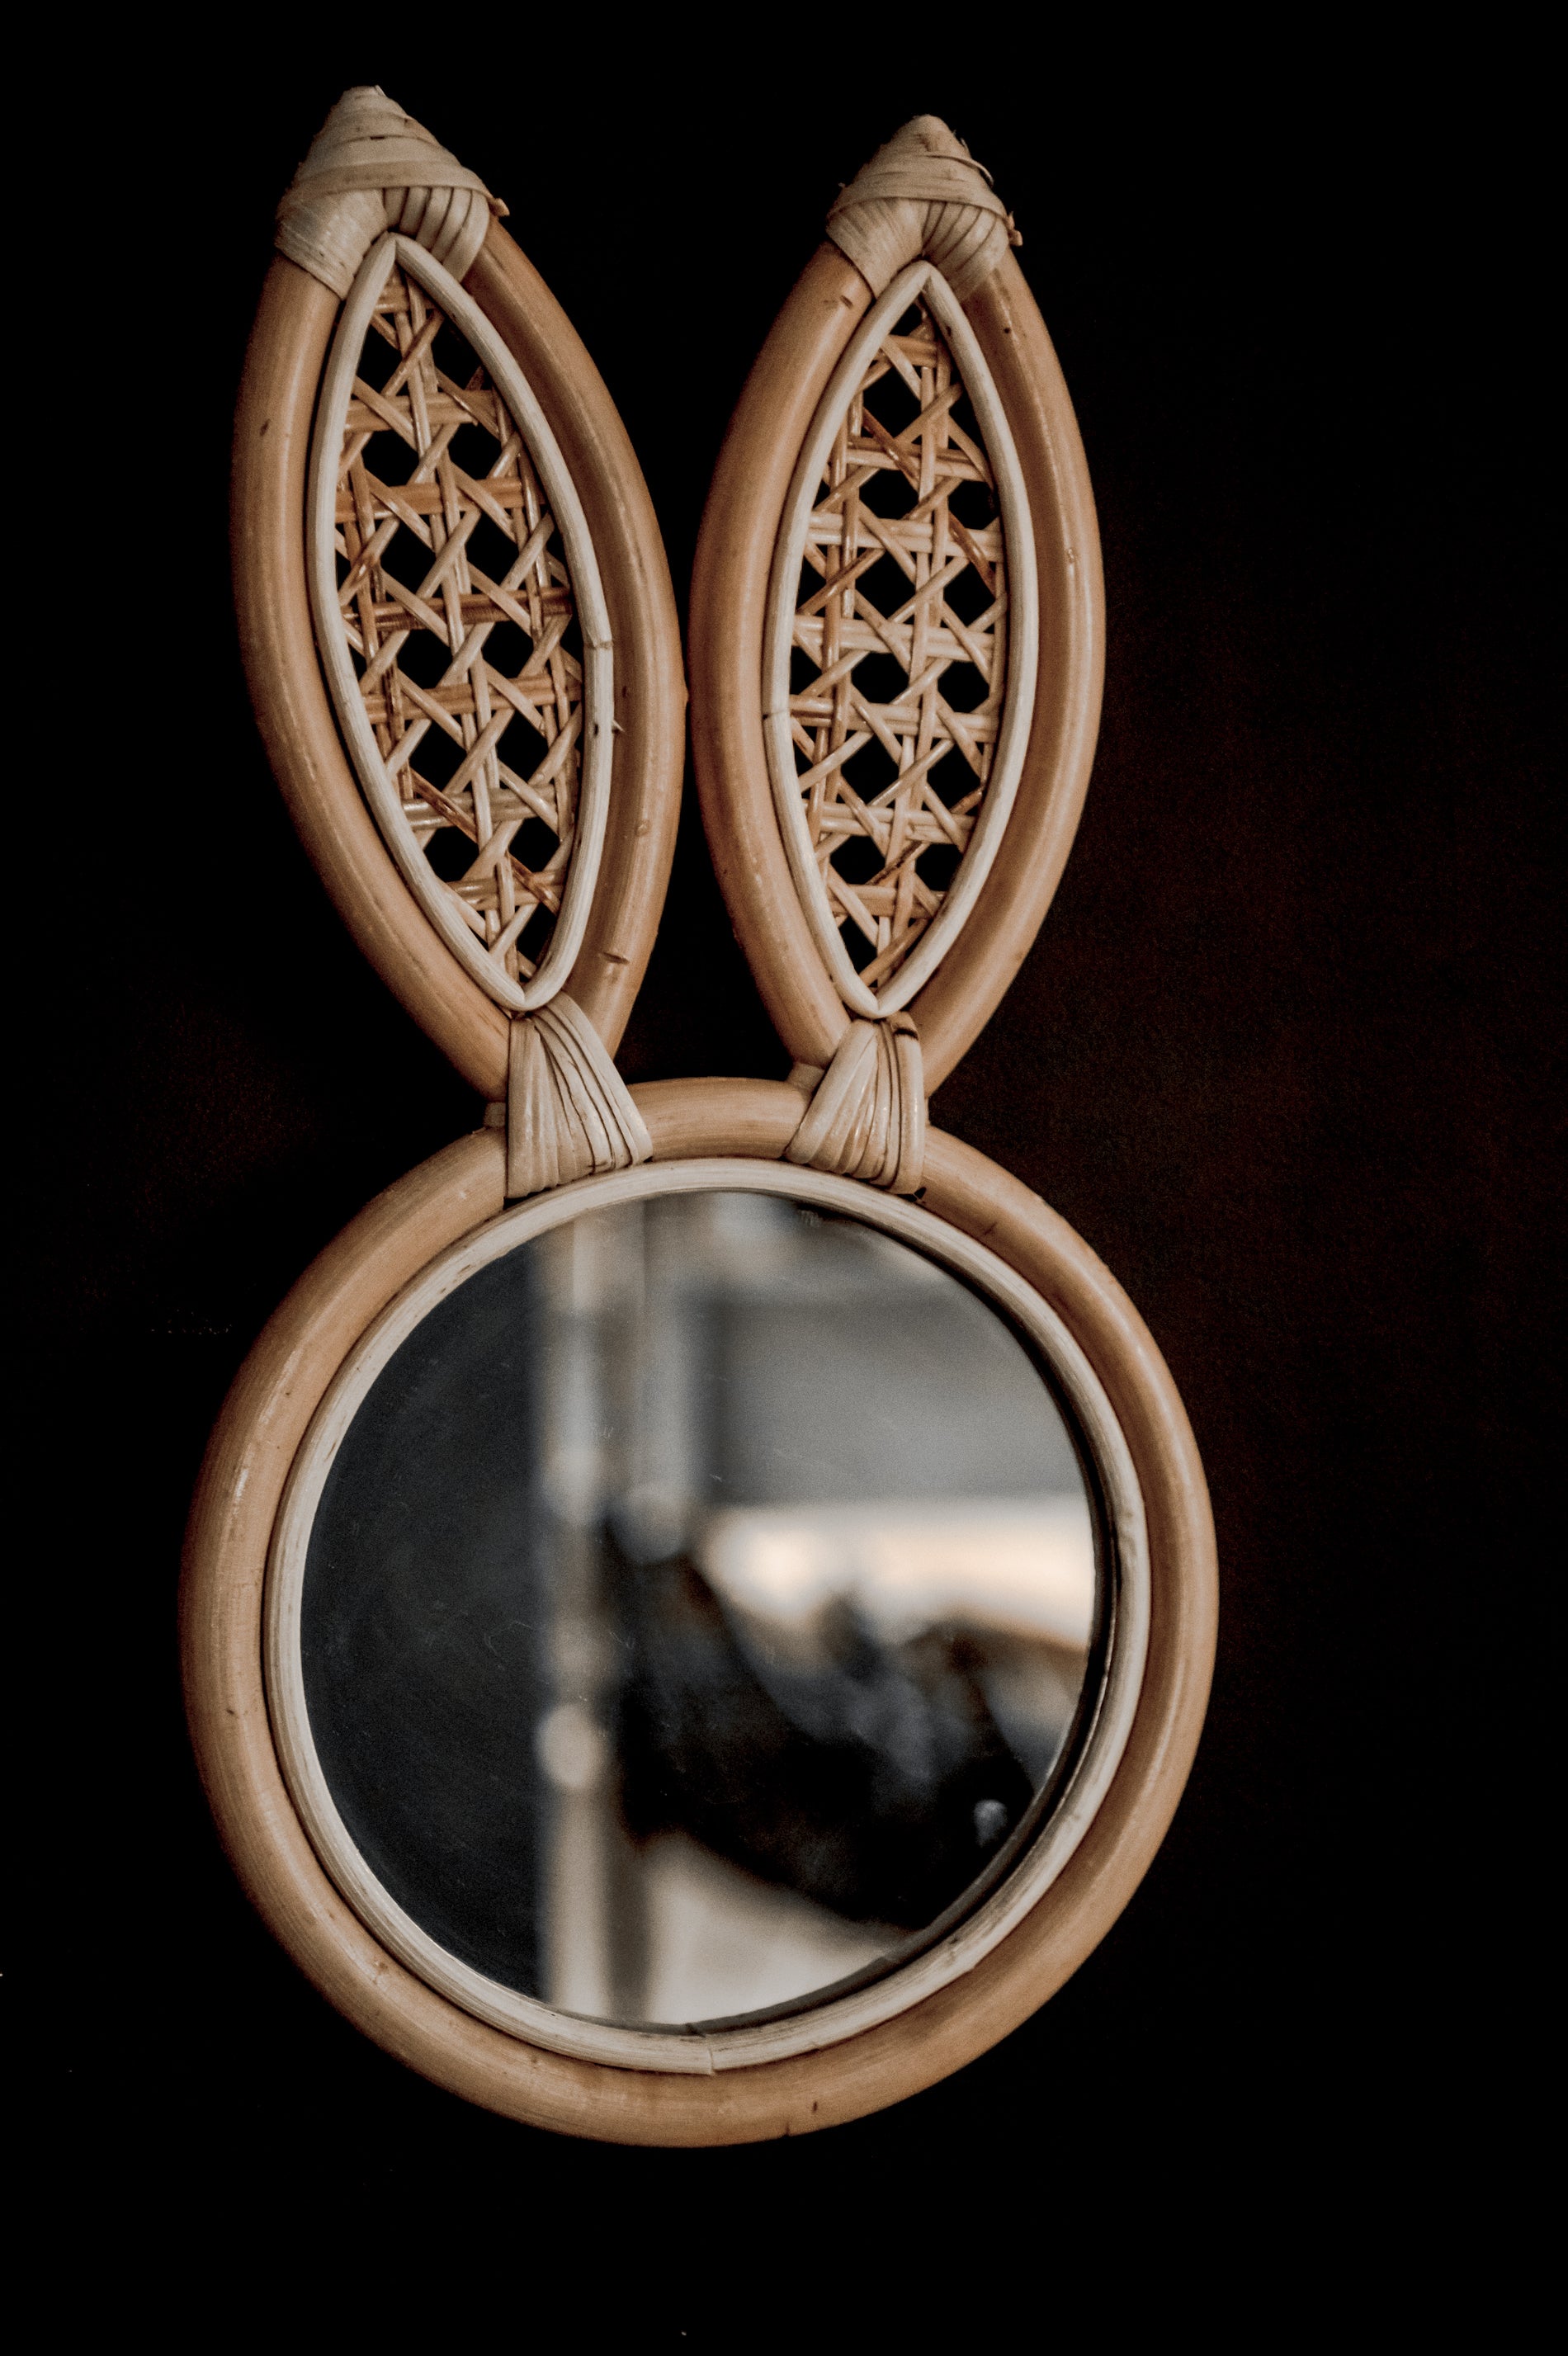 Mirror Wall Decor Rabbit - Rattan Furniture - Boho Home Style - Monnarita - handmade product